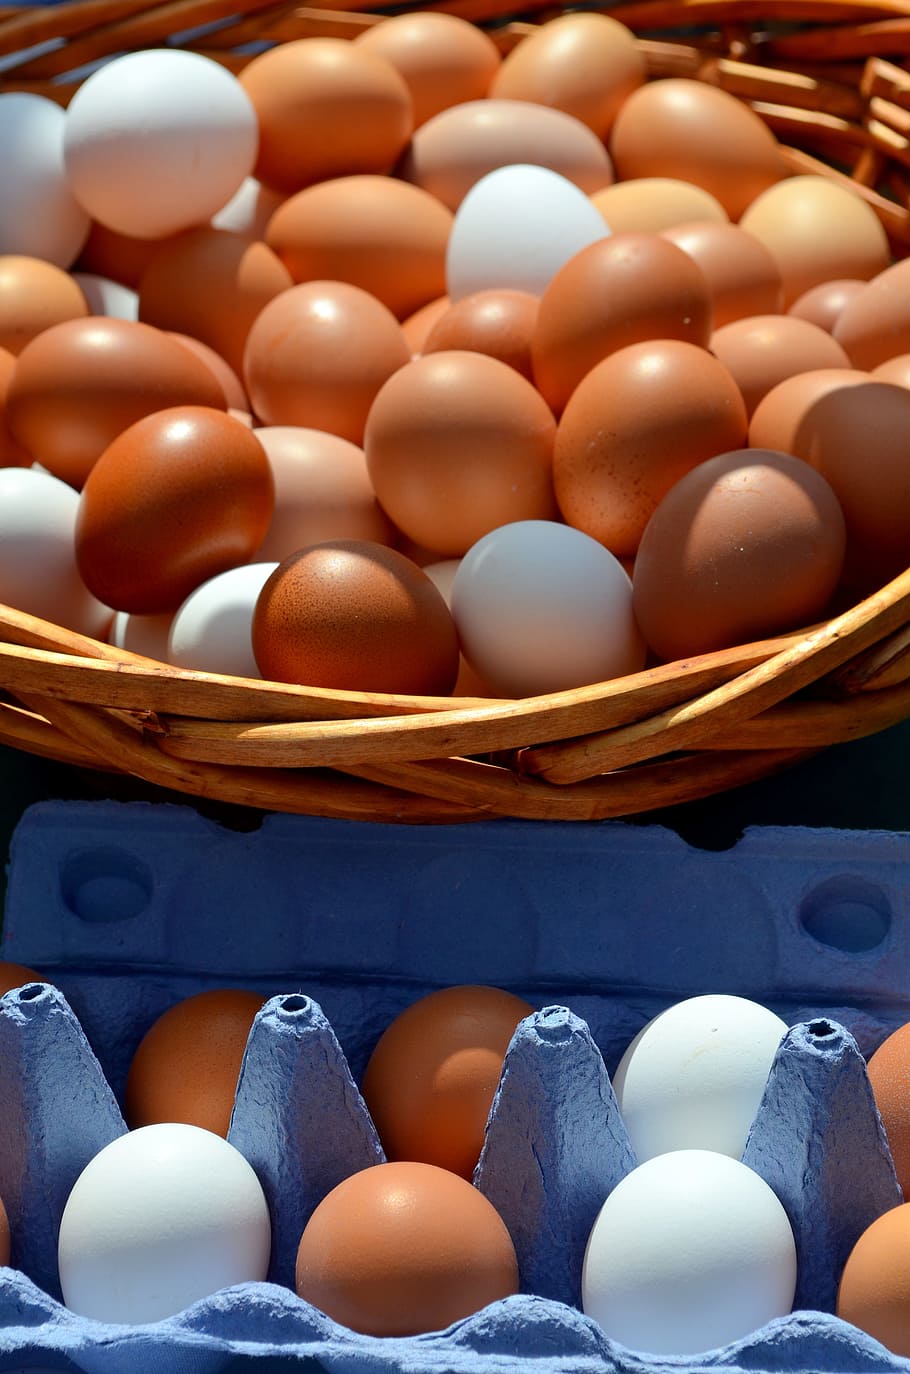 telur, telur ayam, kotak telur, tutup, keranjang nyaman, karton telur, telur coklat, telur mentah, makanan, kemasan telur